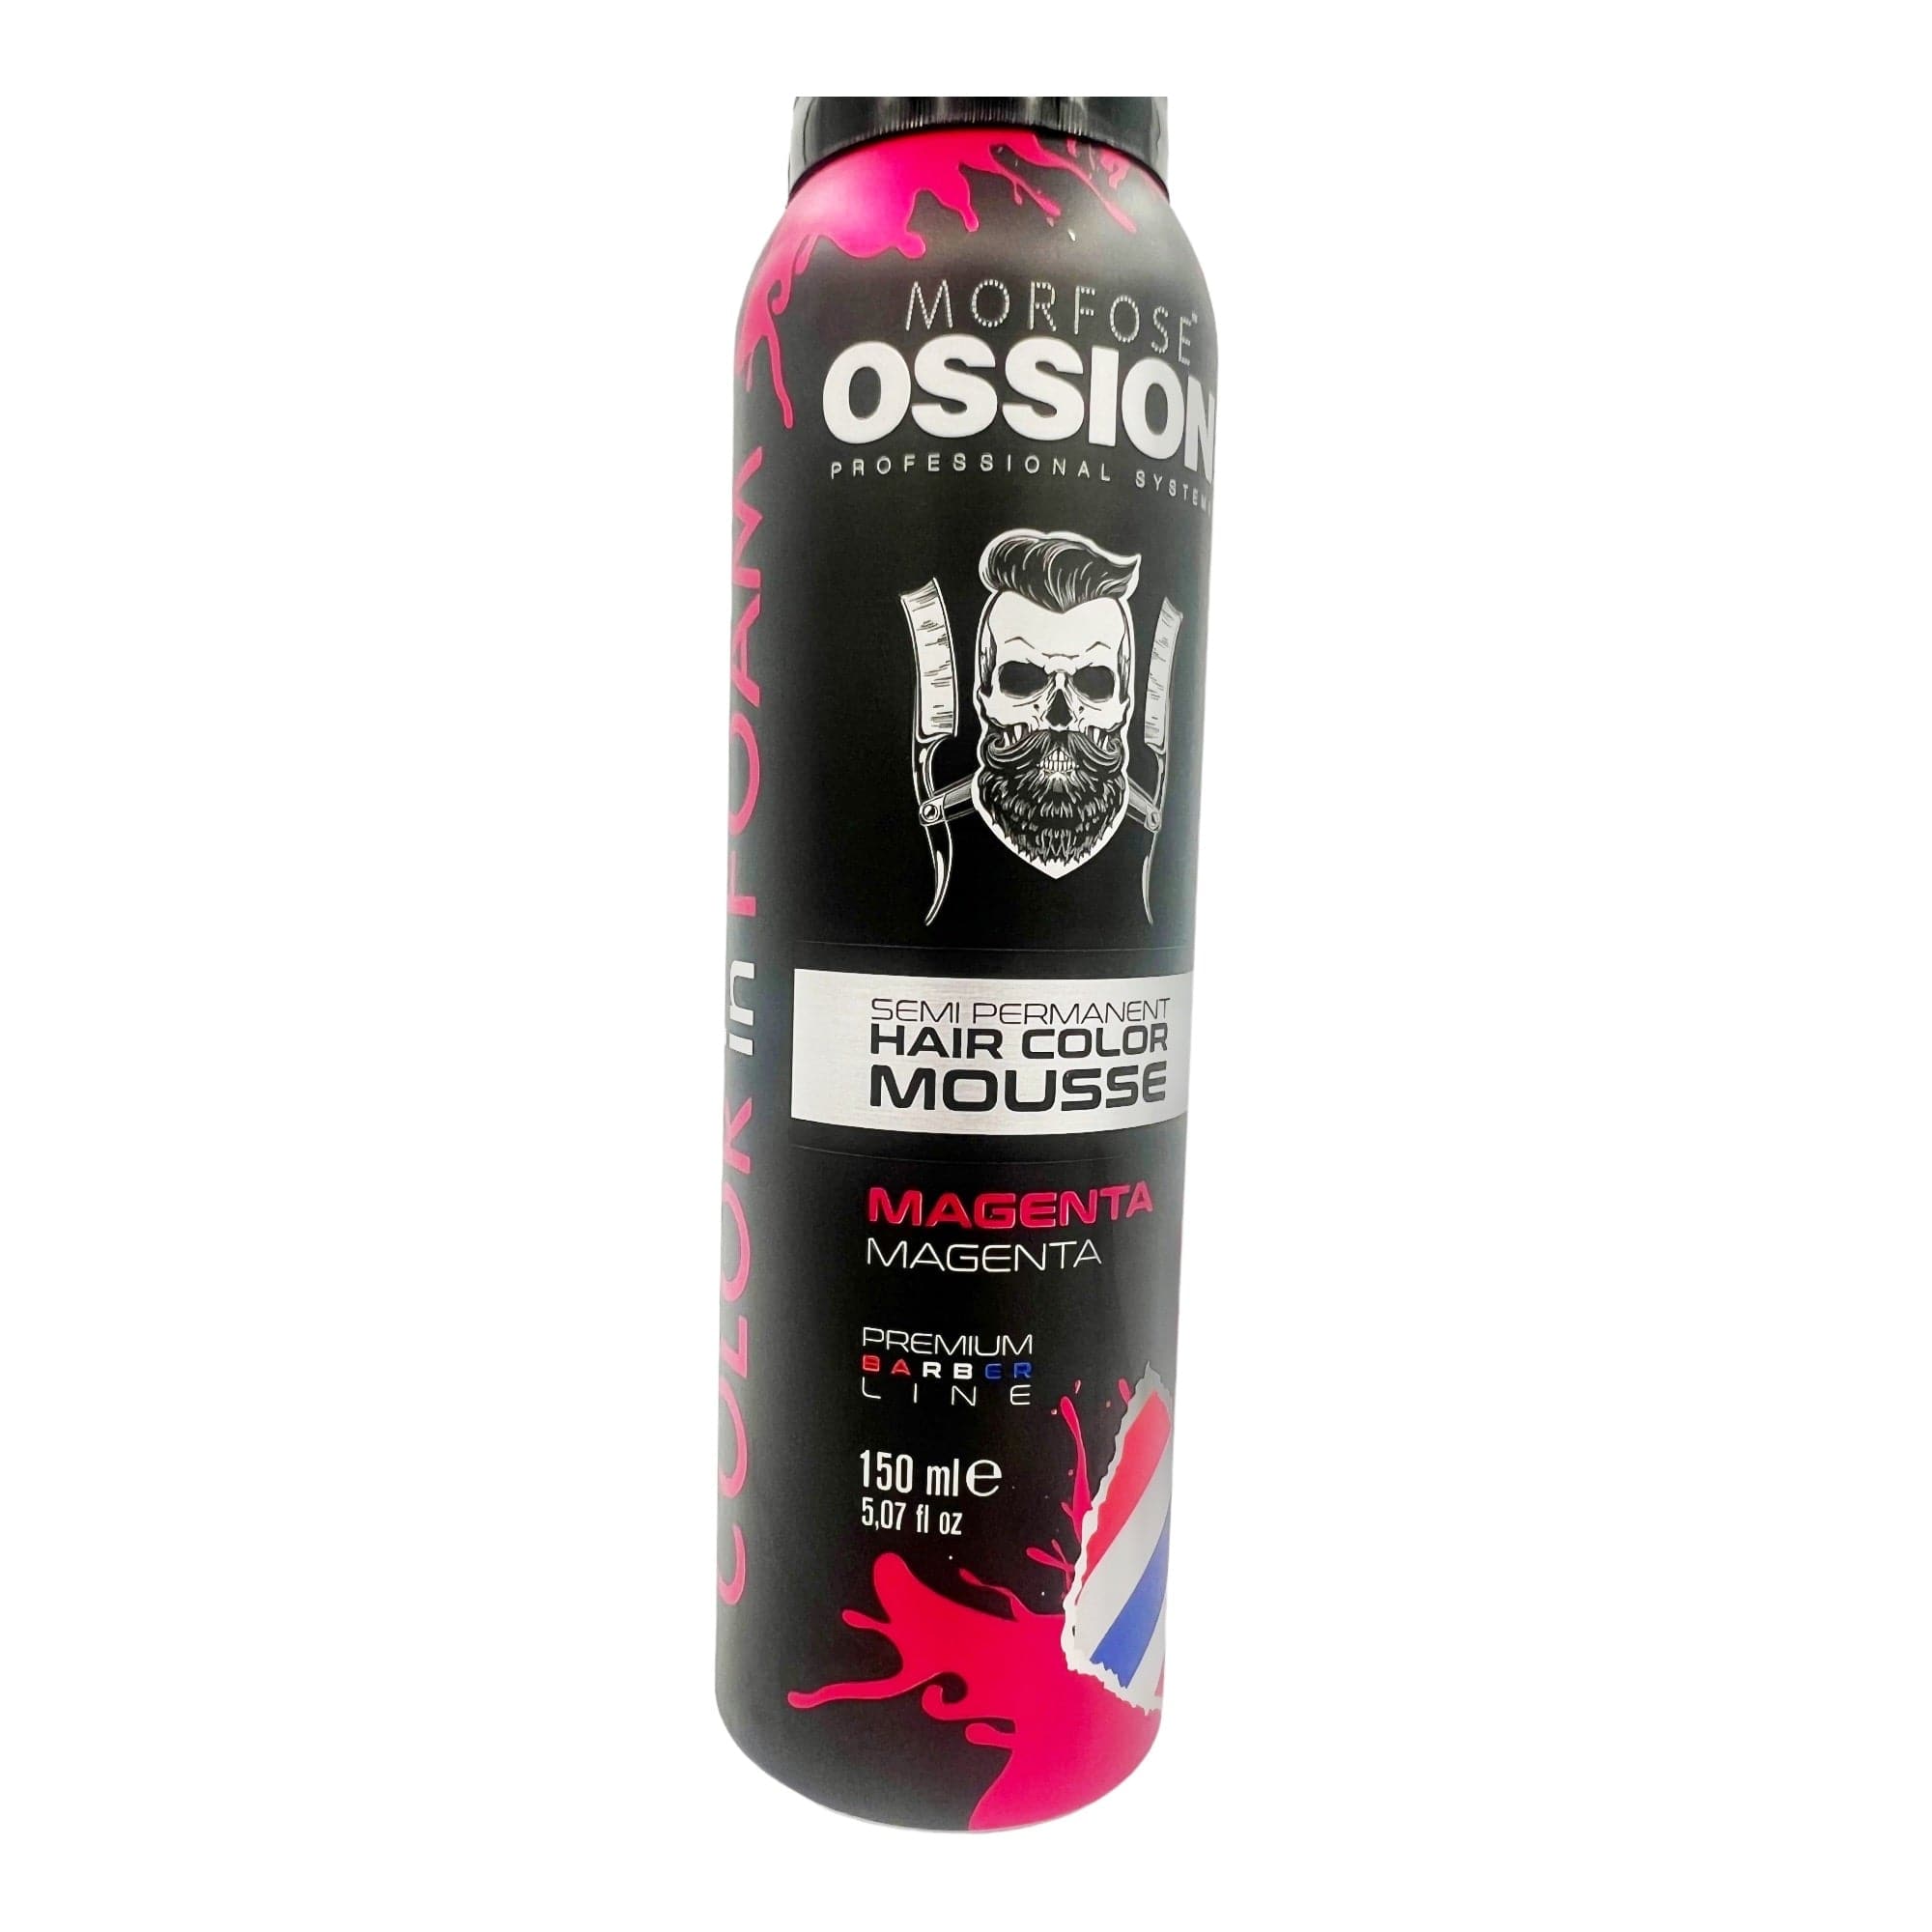 Morfose - Ossion Semi Permanent Hair Colour Mousse Magenta 150ml